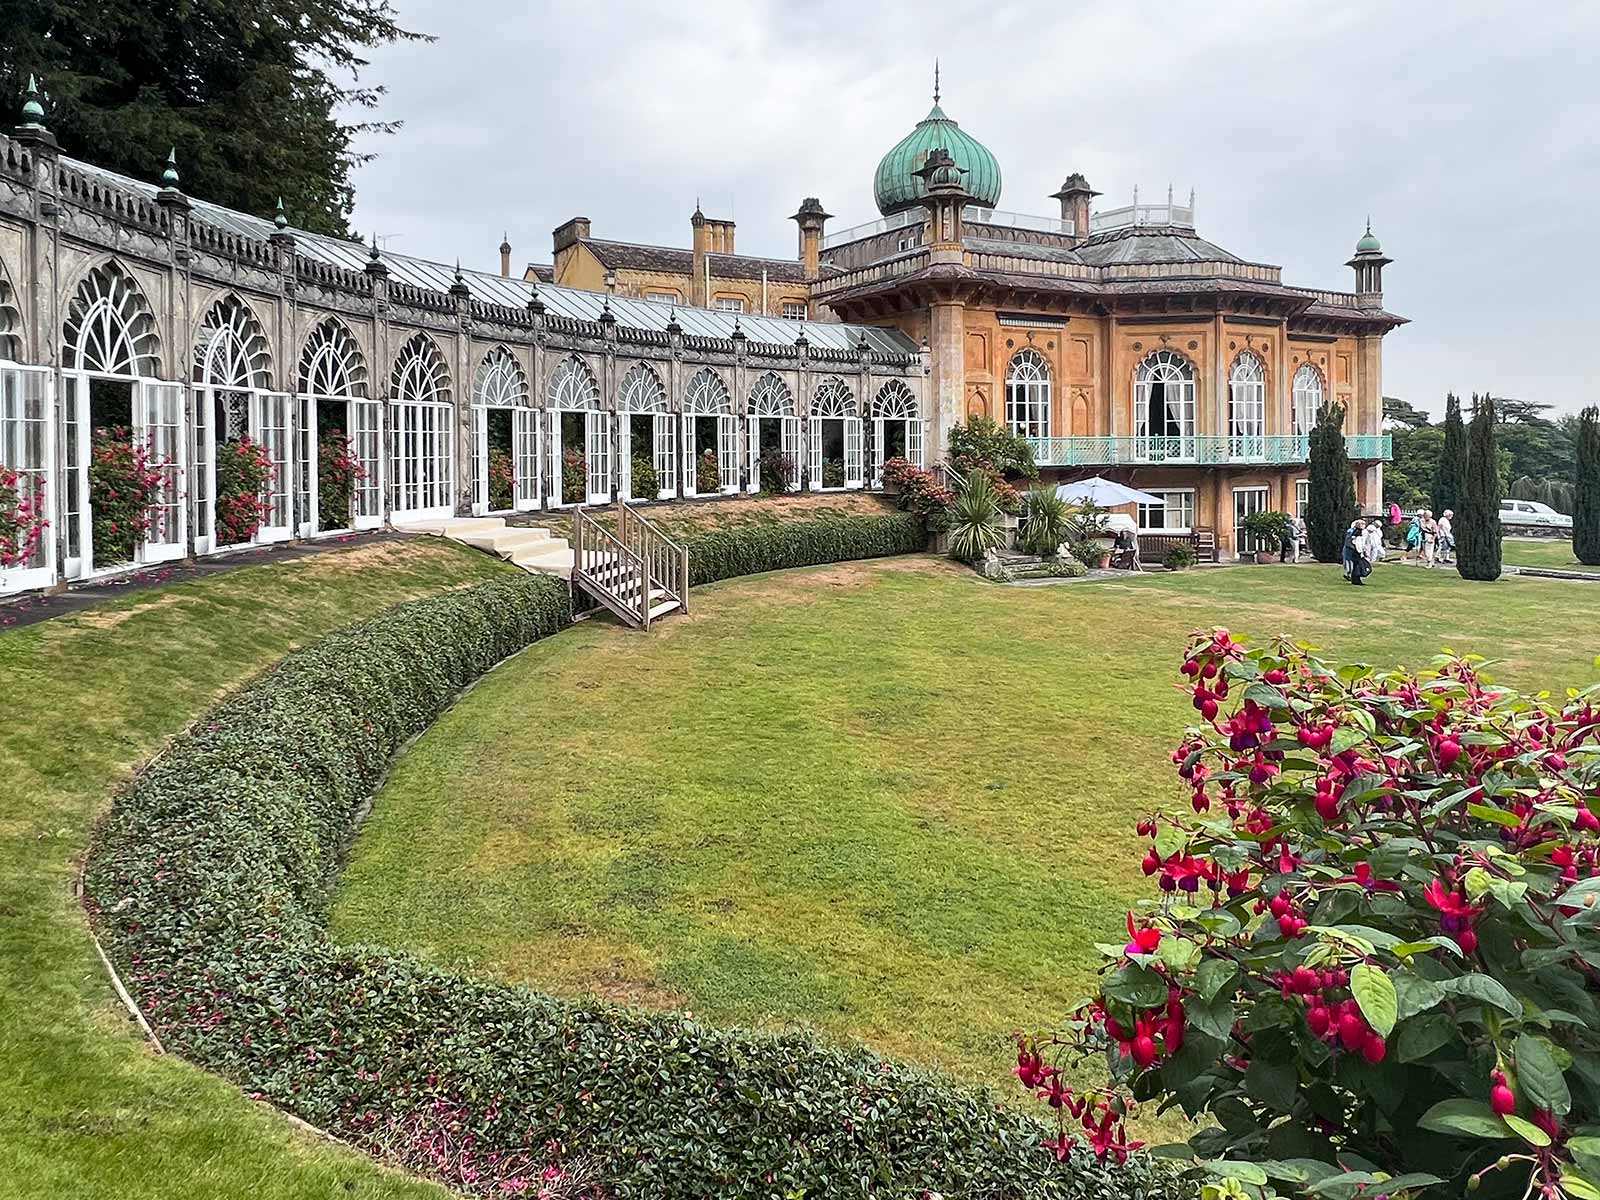 Maison et jardin de Sezincote, Cotswolds, Angleterre, Royaume-Uni / Sezincote House and Garden, Cotswolds, England, UK